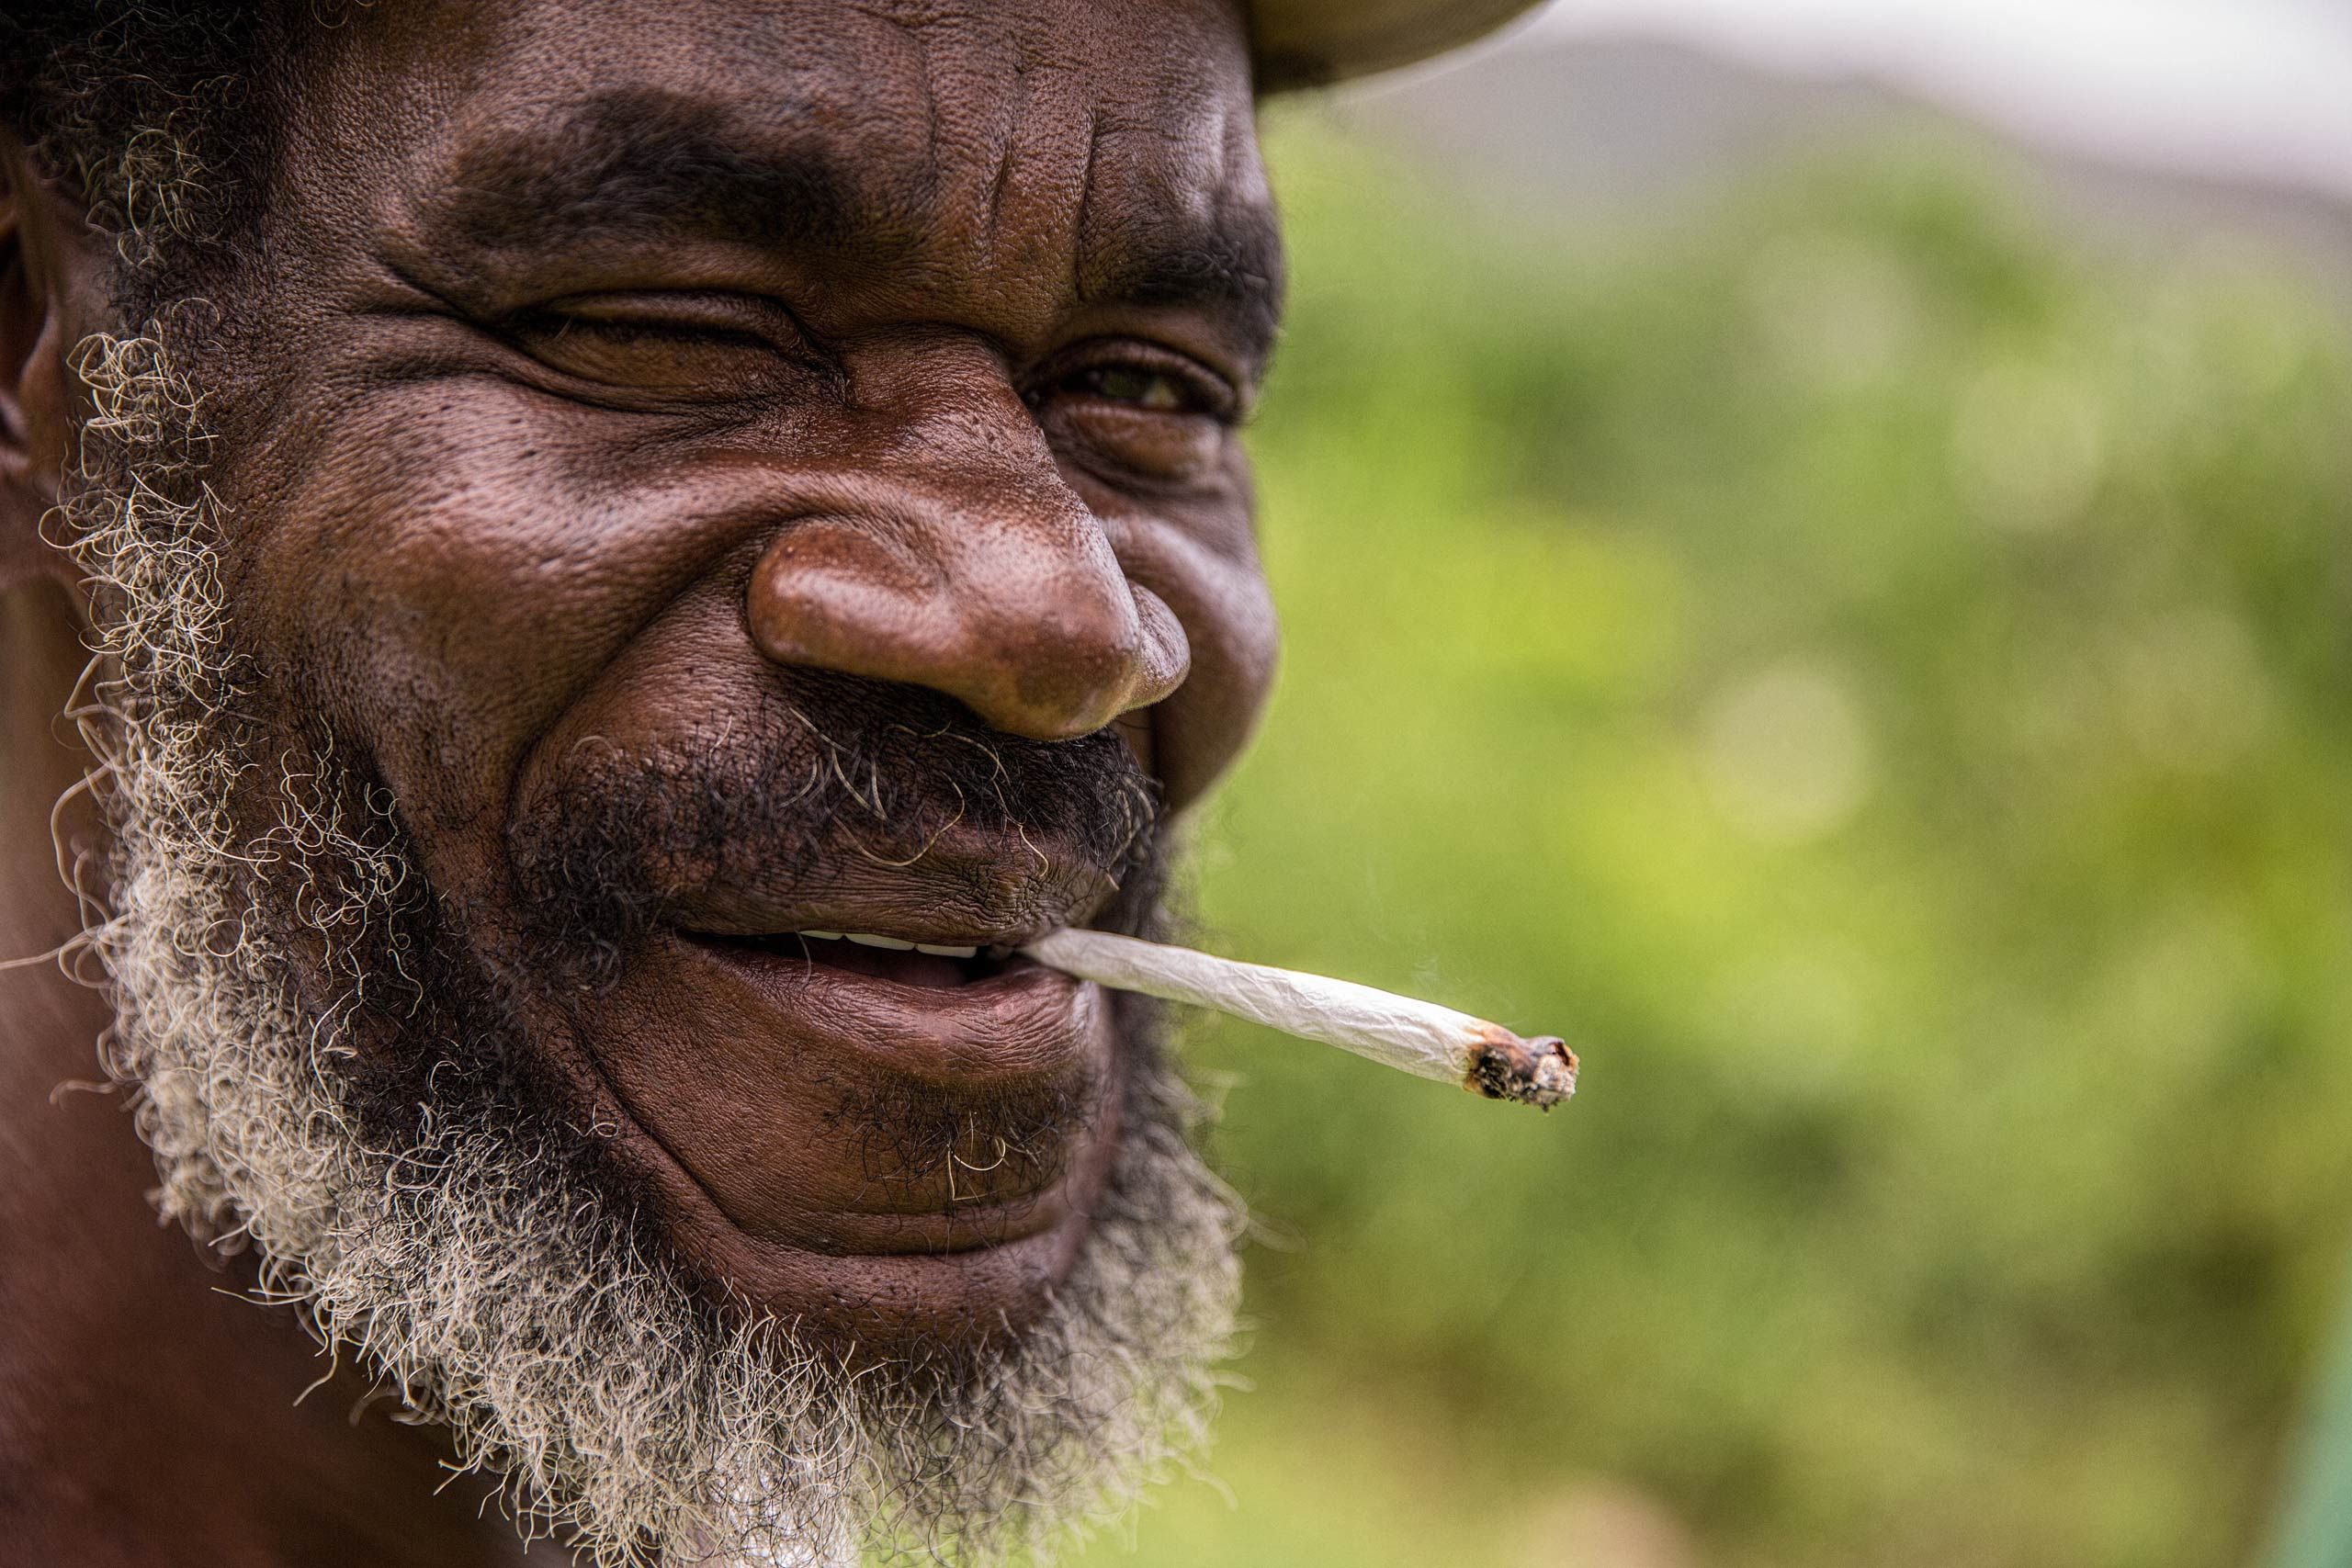 Rastafari Man in Jamaica with a Spliff